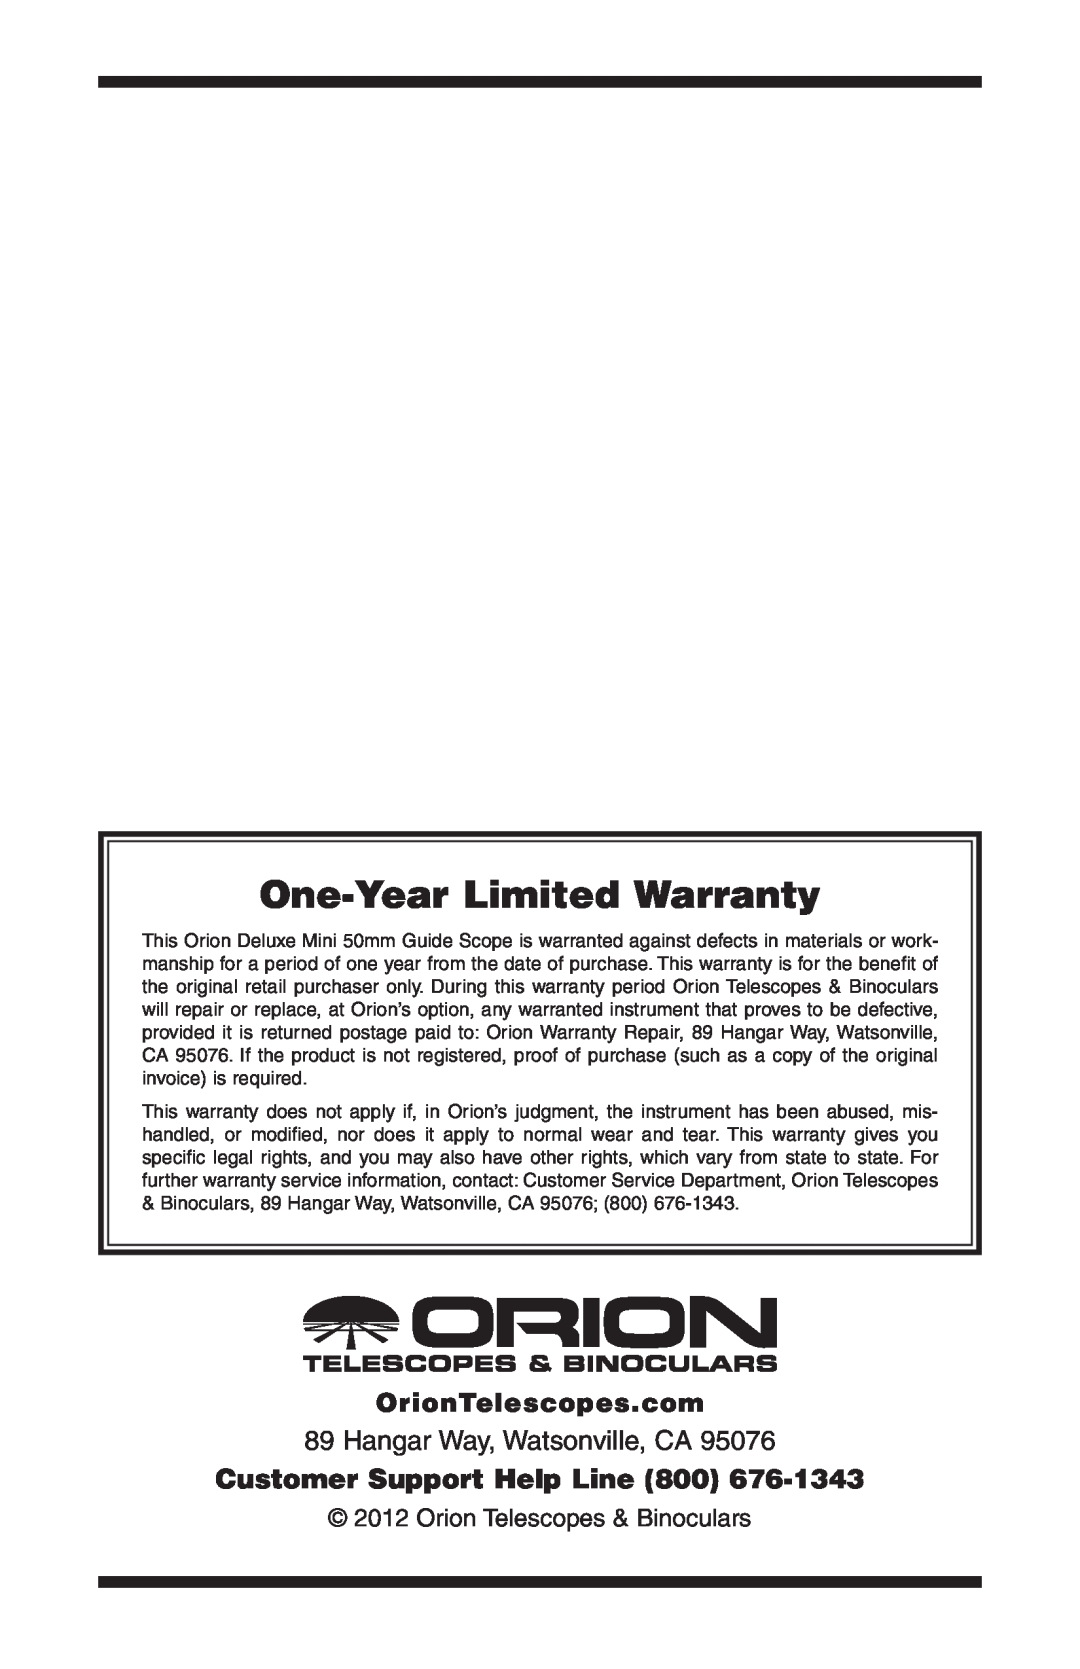 Orion 13022 One-YearLimited Warranty, Hangar Way, Watsonville, CA, Customer Support Help Line, OrionTelescopes.com 